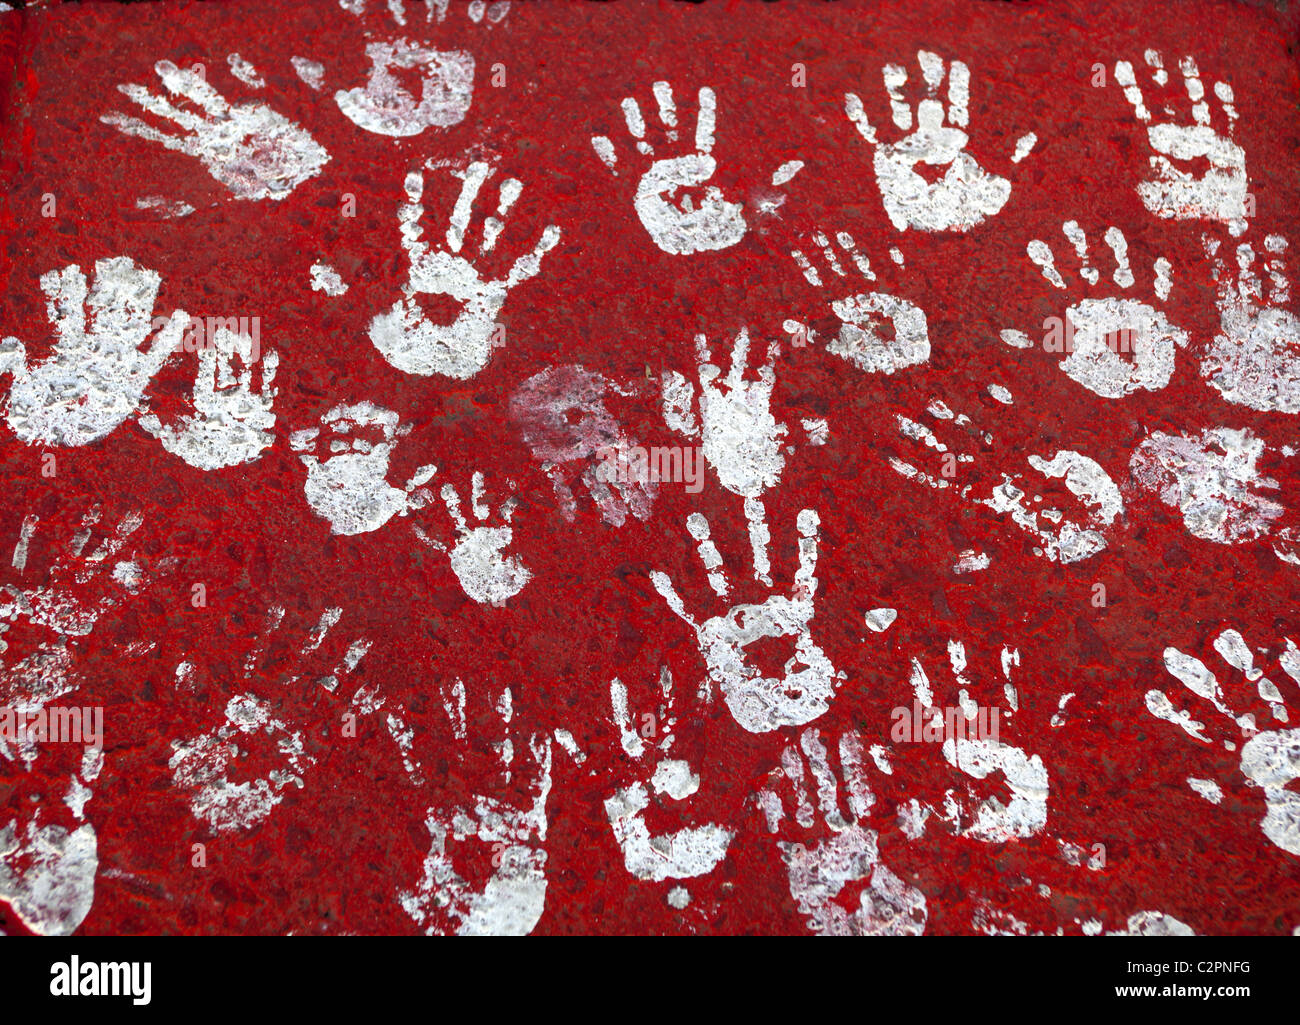 Political Hand Prints Demonstration Zocalo Mexico City Stock Photo